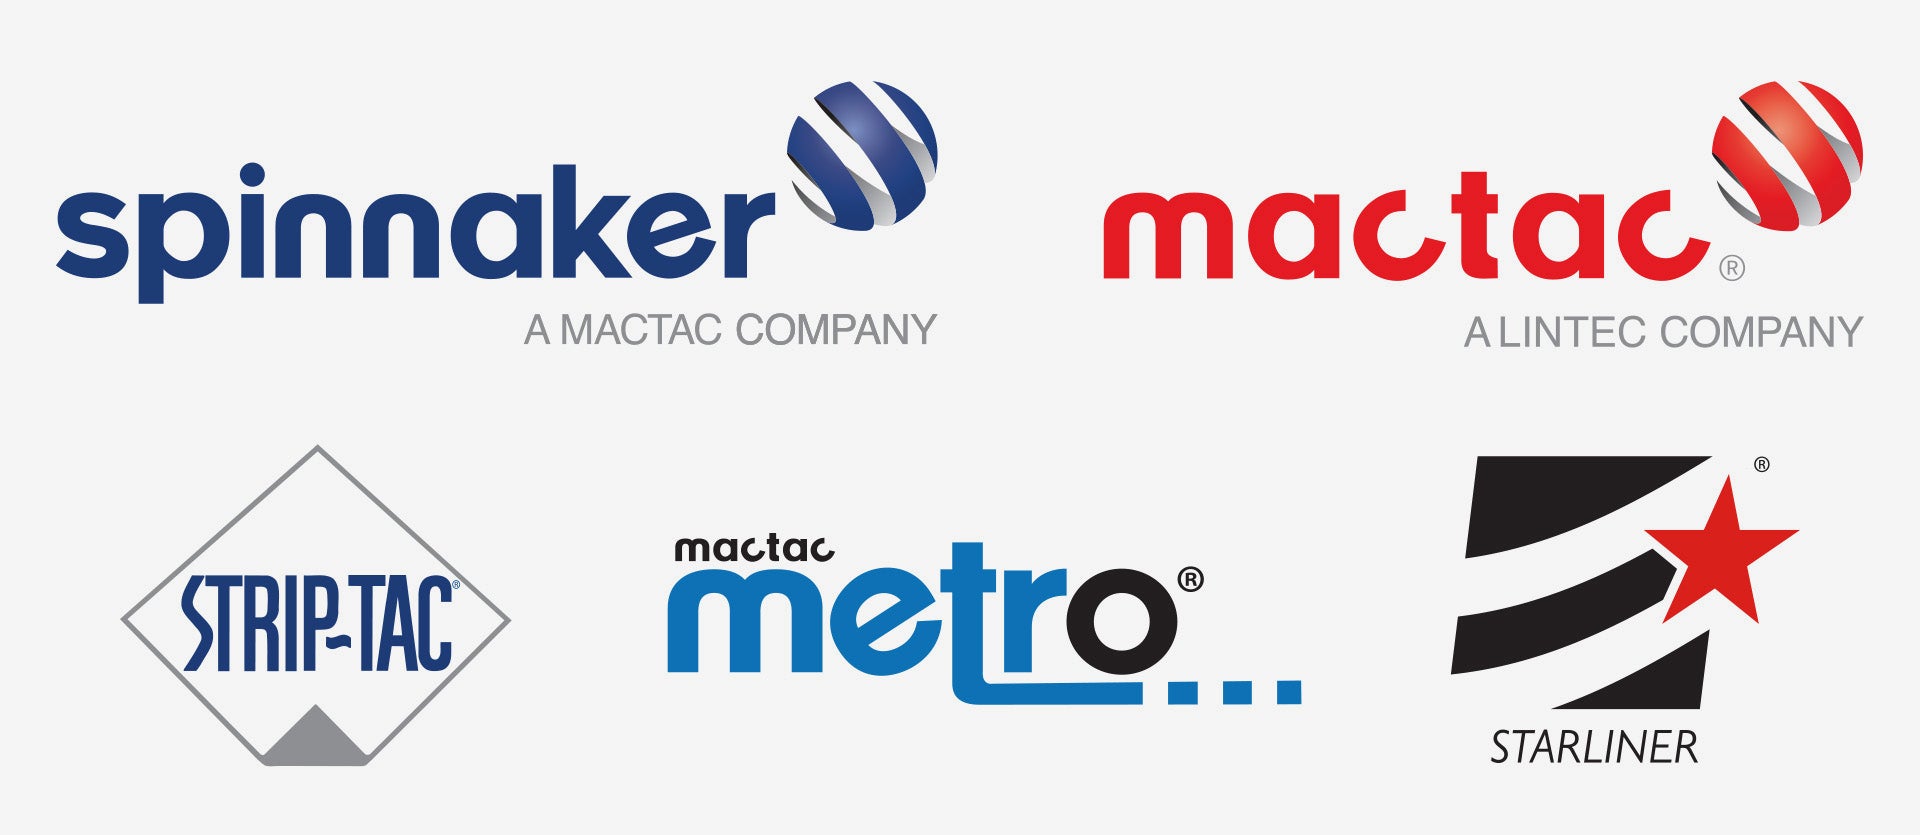 Spinnaker Mactac logos